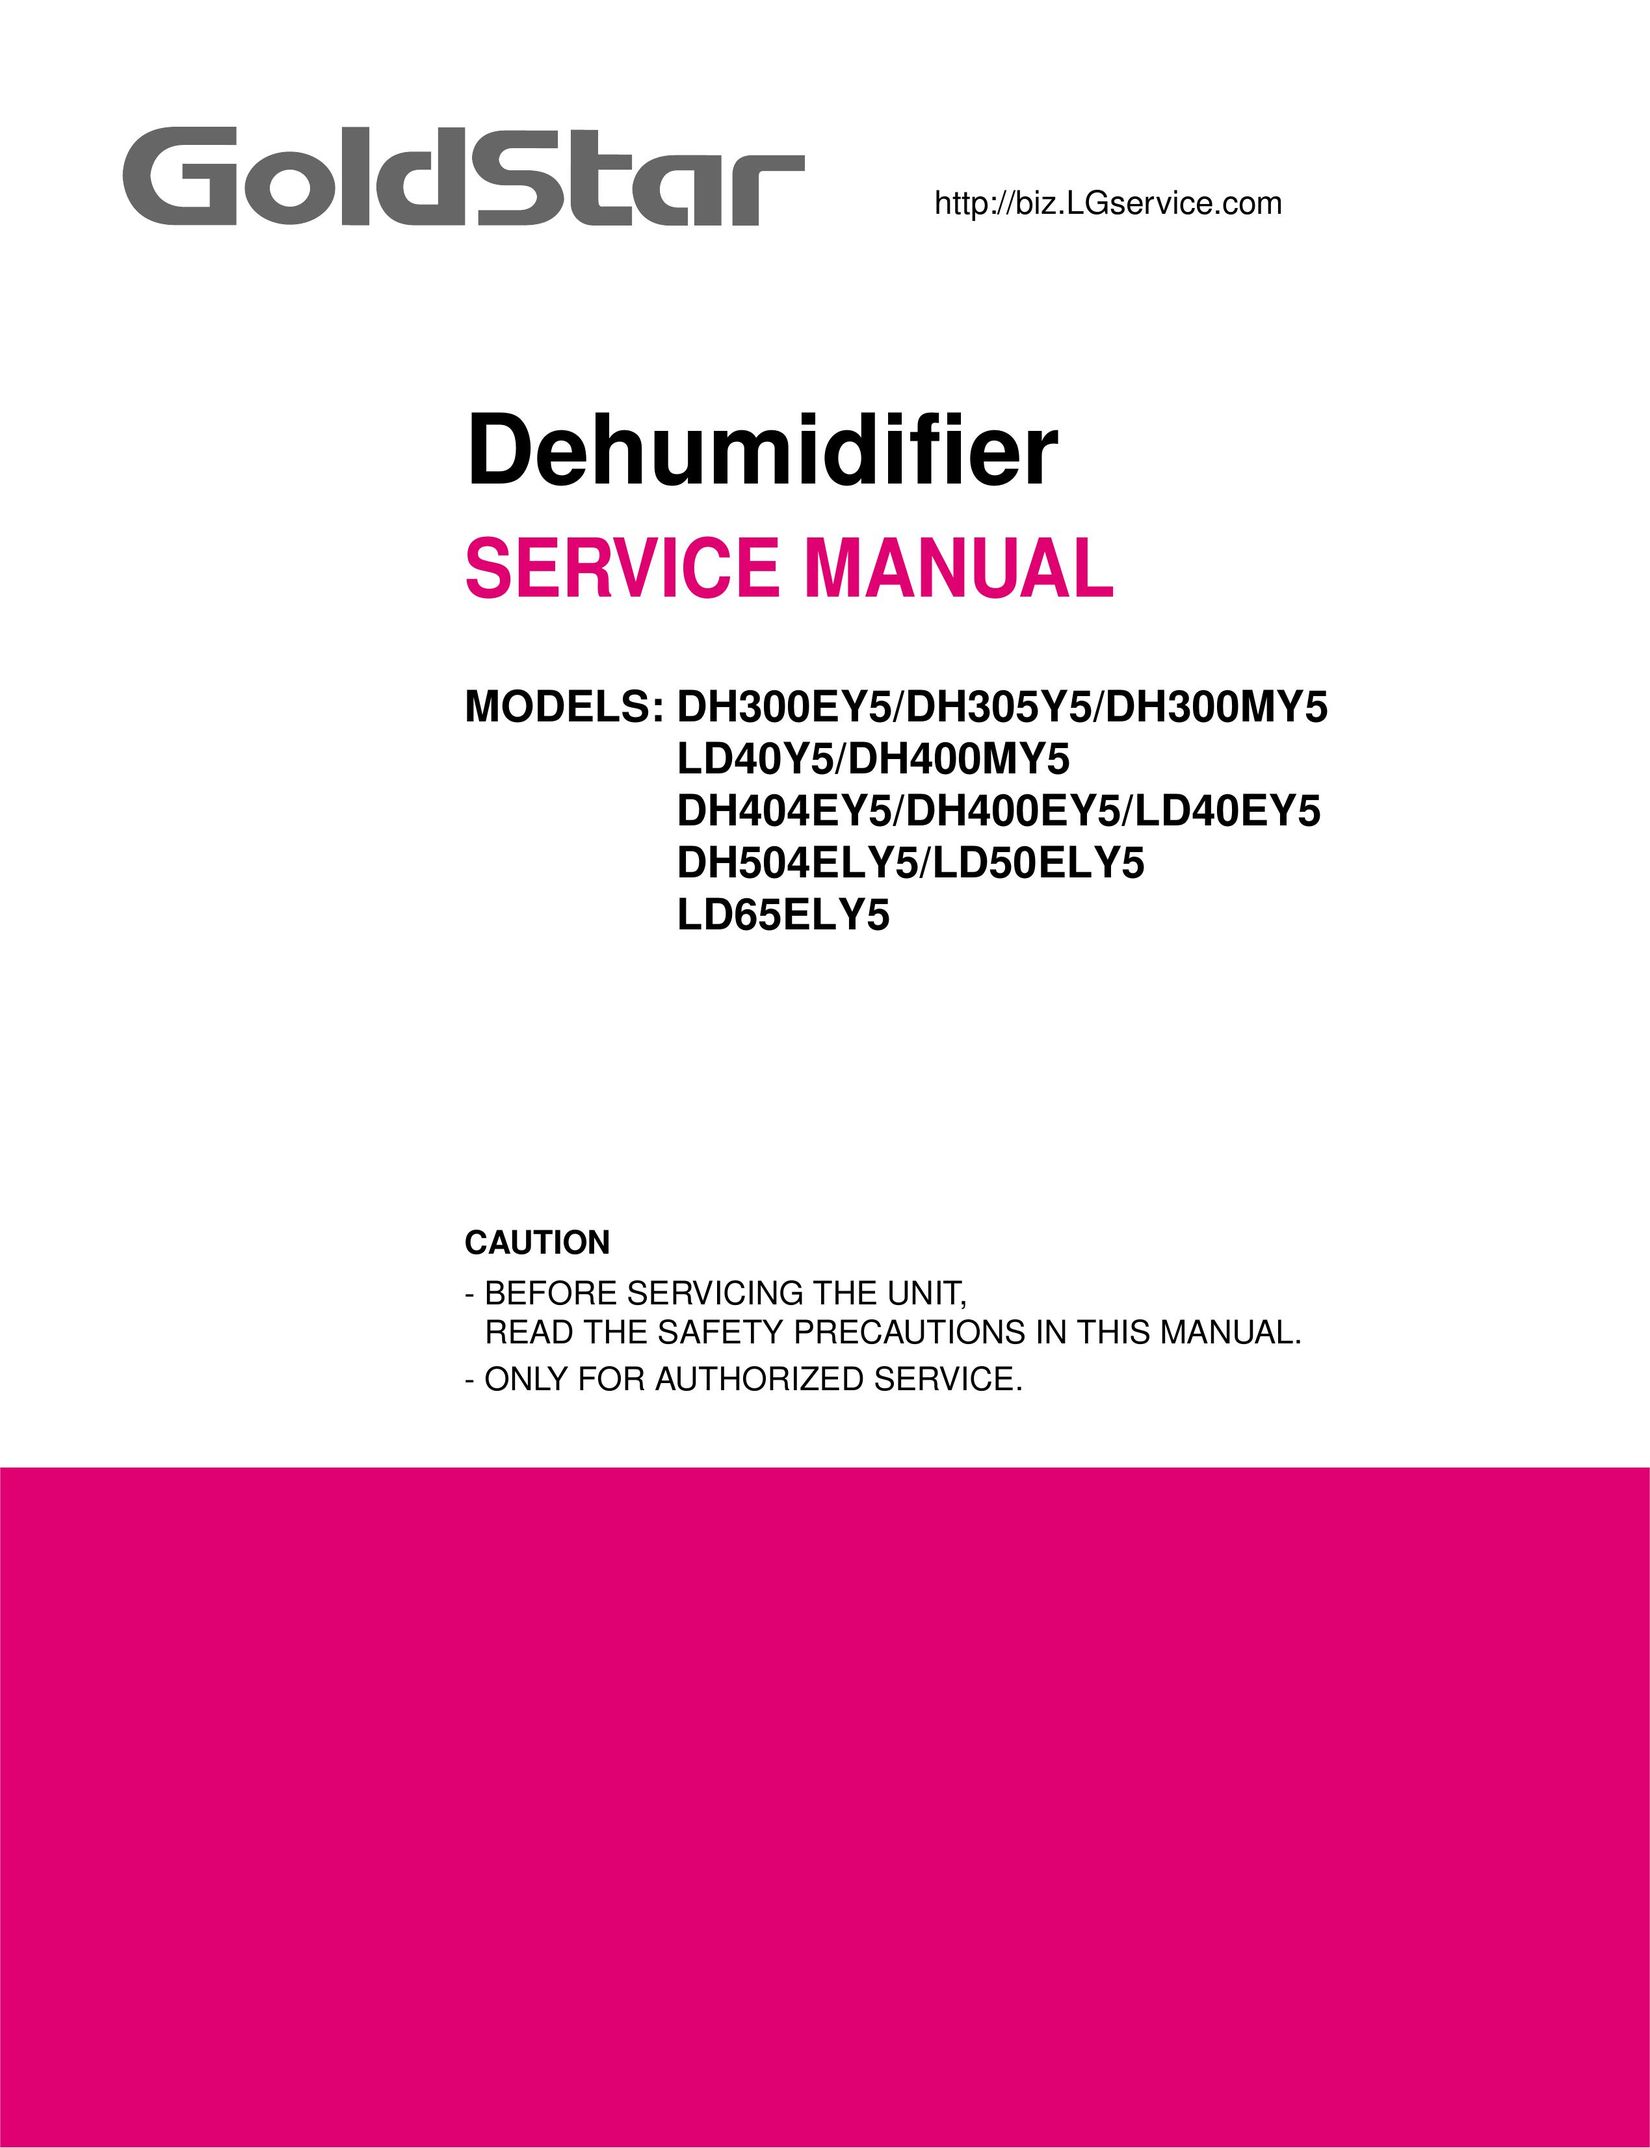 Frigidaire DH504ELY5 Dehumidifier User Manual